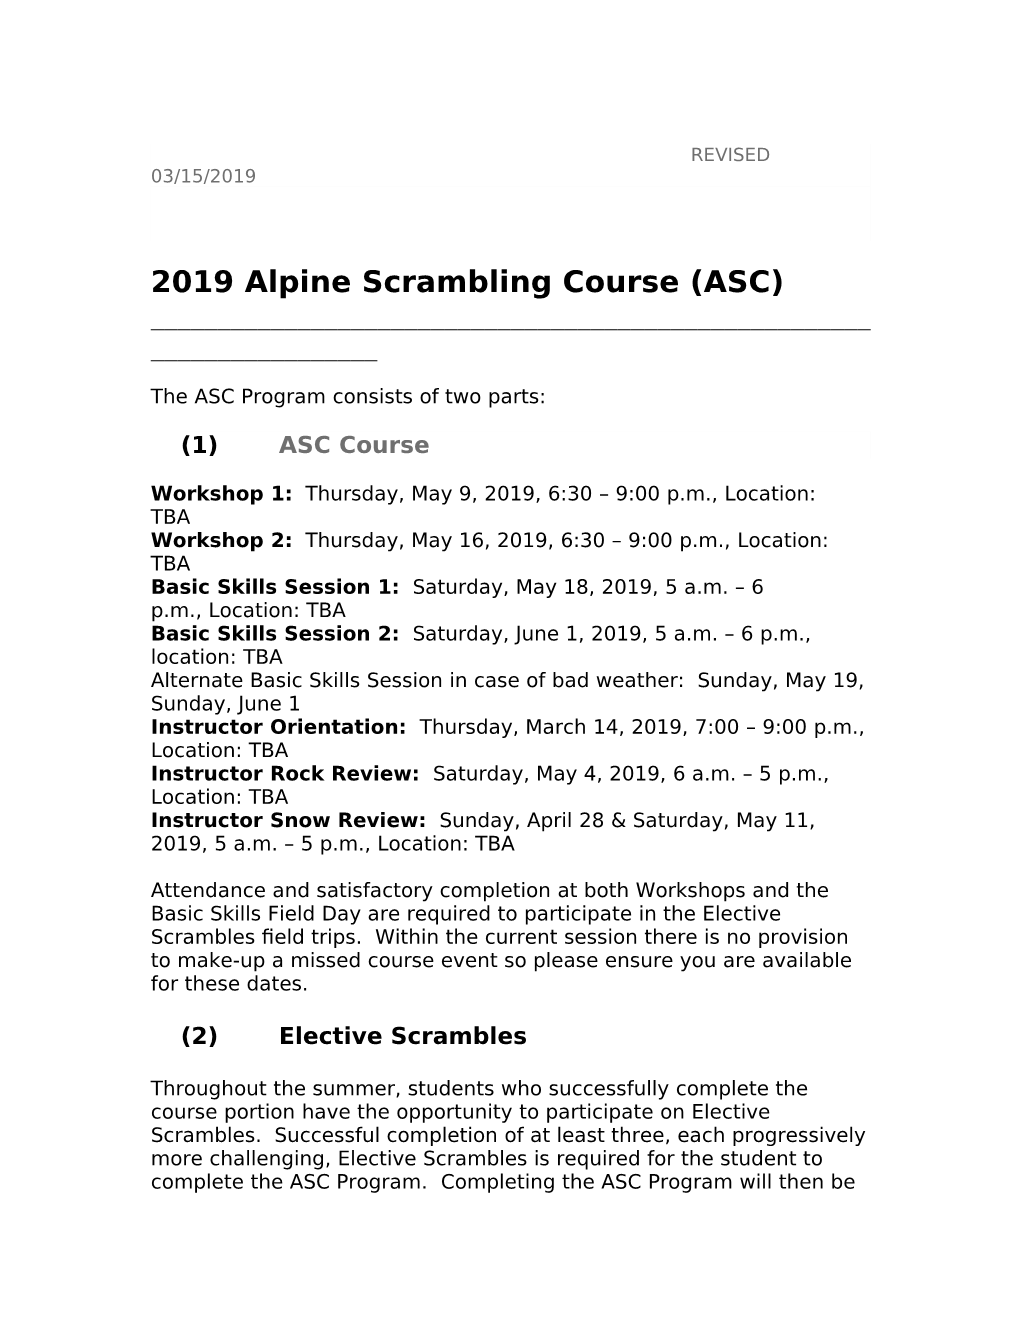 2019 Alpine Scrambling Course (ASC) ______